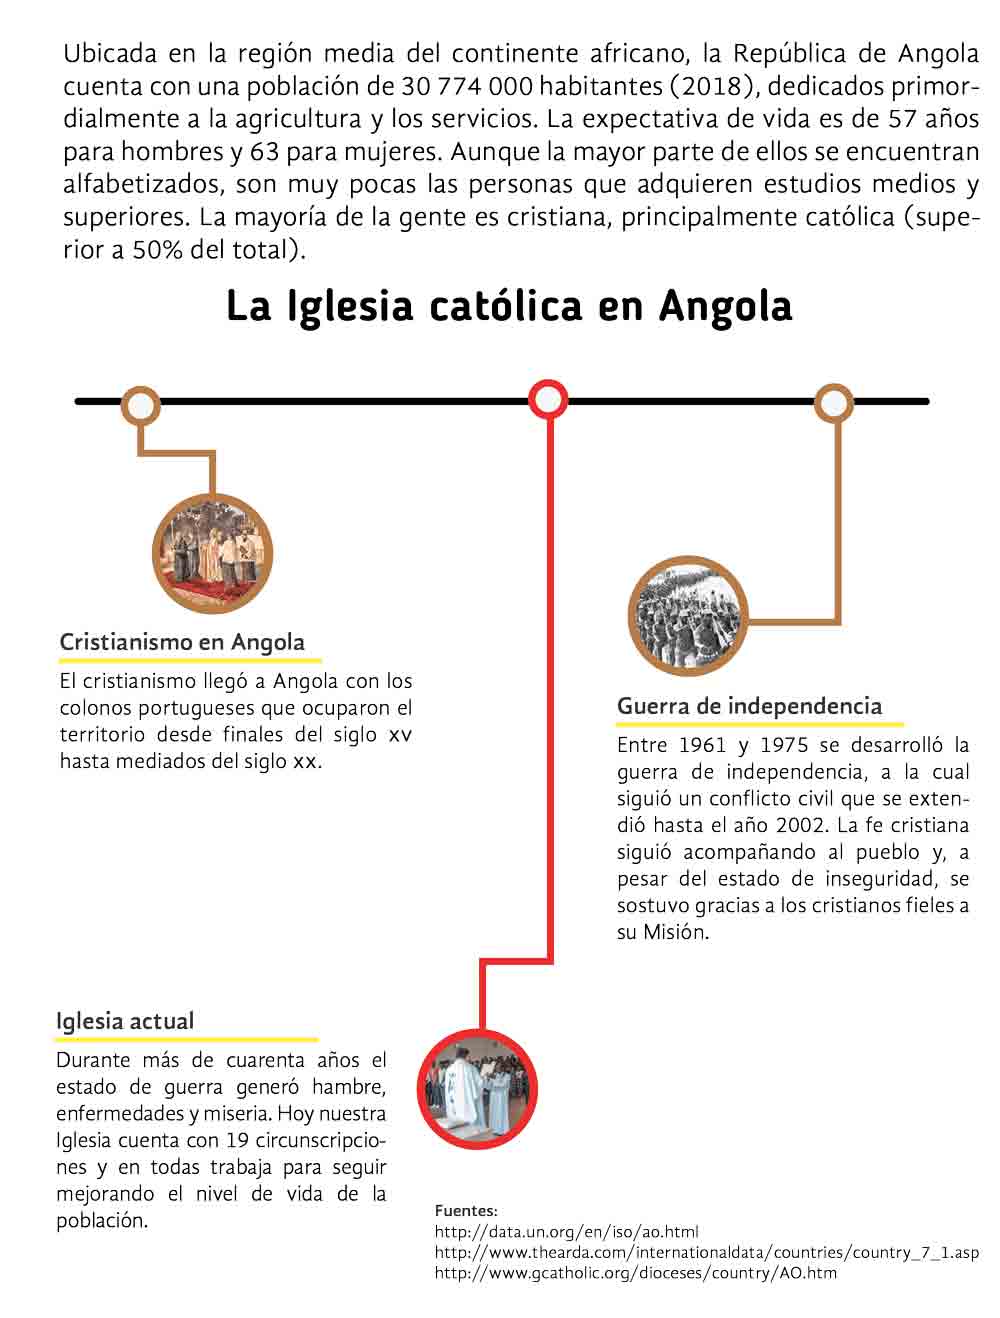 Infografia de Angola